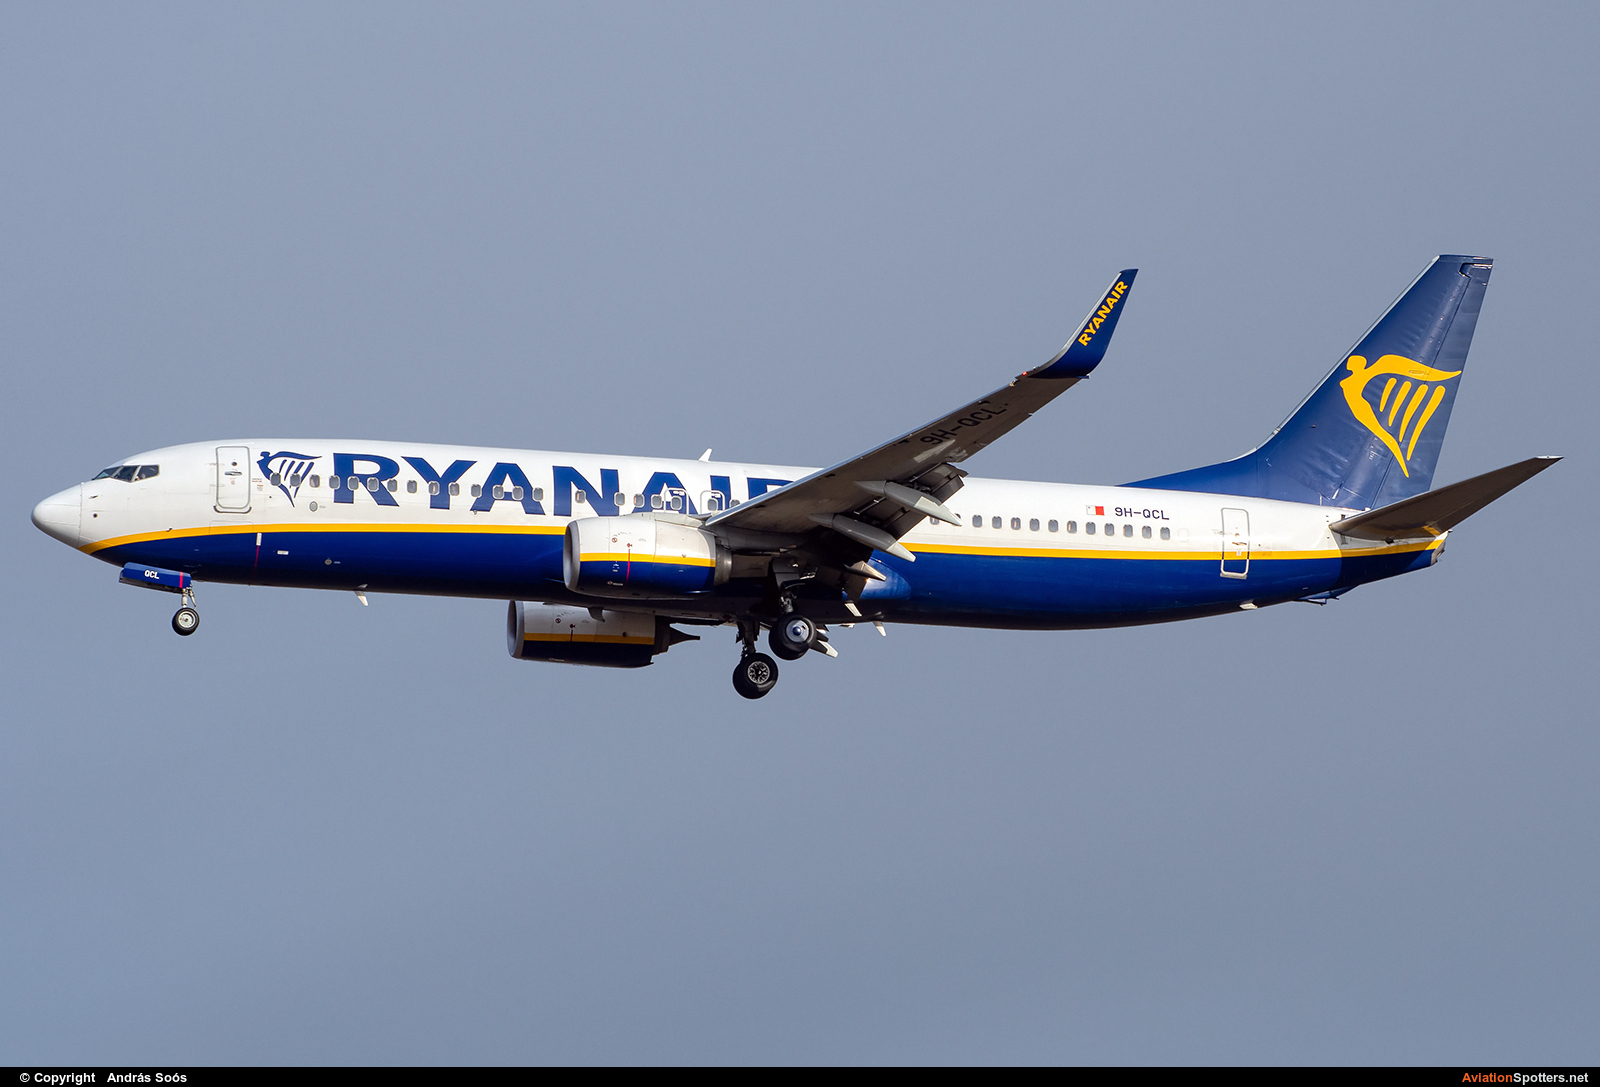 Ryanair  -  737-800  (9H-QCL) By András Soós (sas1965)